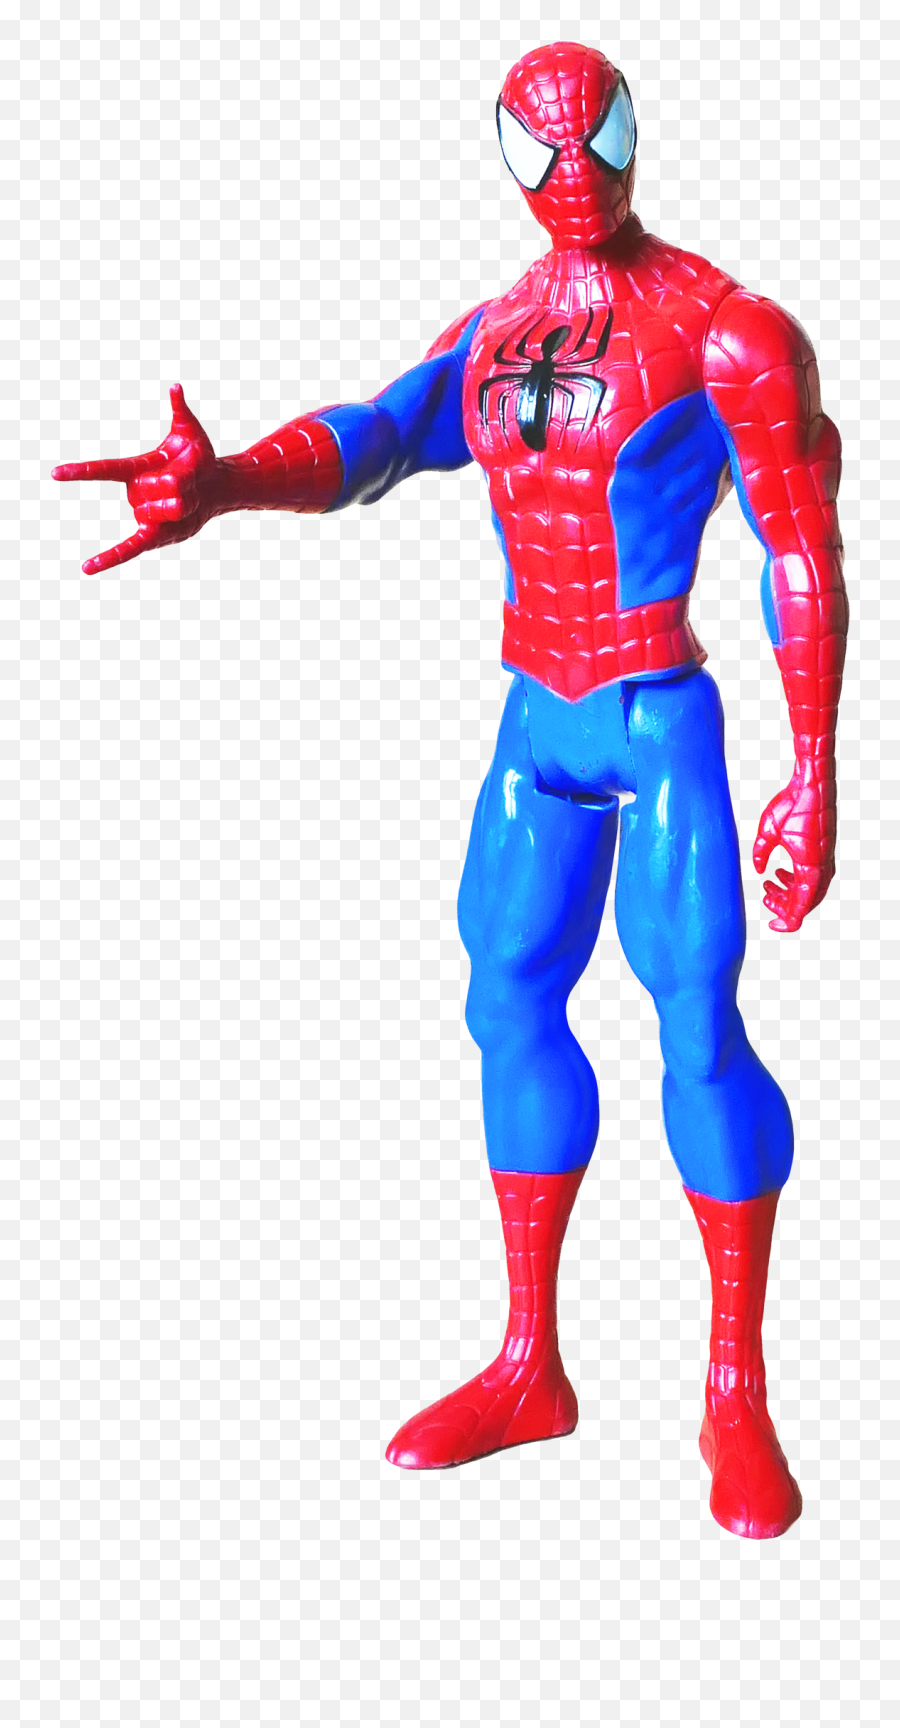 Superhero Toy Png Transparent Image - Spiderman Toy No Background Emoji,Toy Png